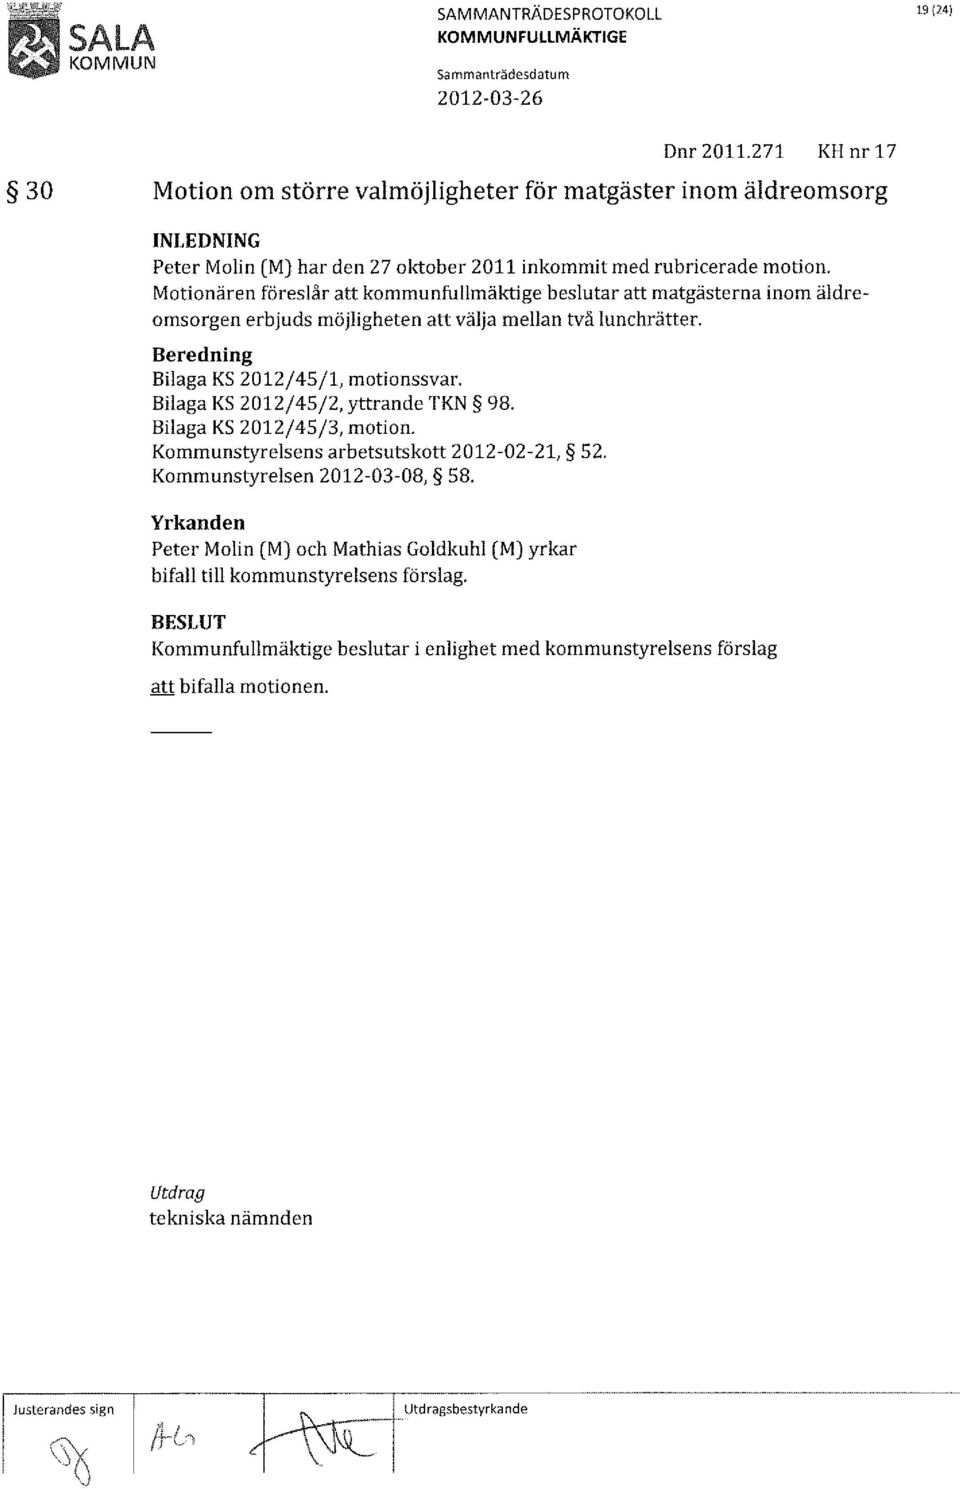 Bilaga KS 2012/45/2, yttrande TKN 98. Bilaga KS 2012/45/3, motion. Kommunstyrelsens arbetsutskott 2012-02-21, 52. Kommunstyrelsen 2012-03-08, 58.